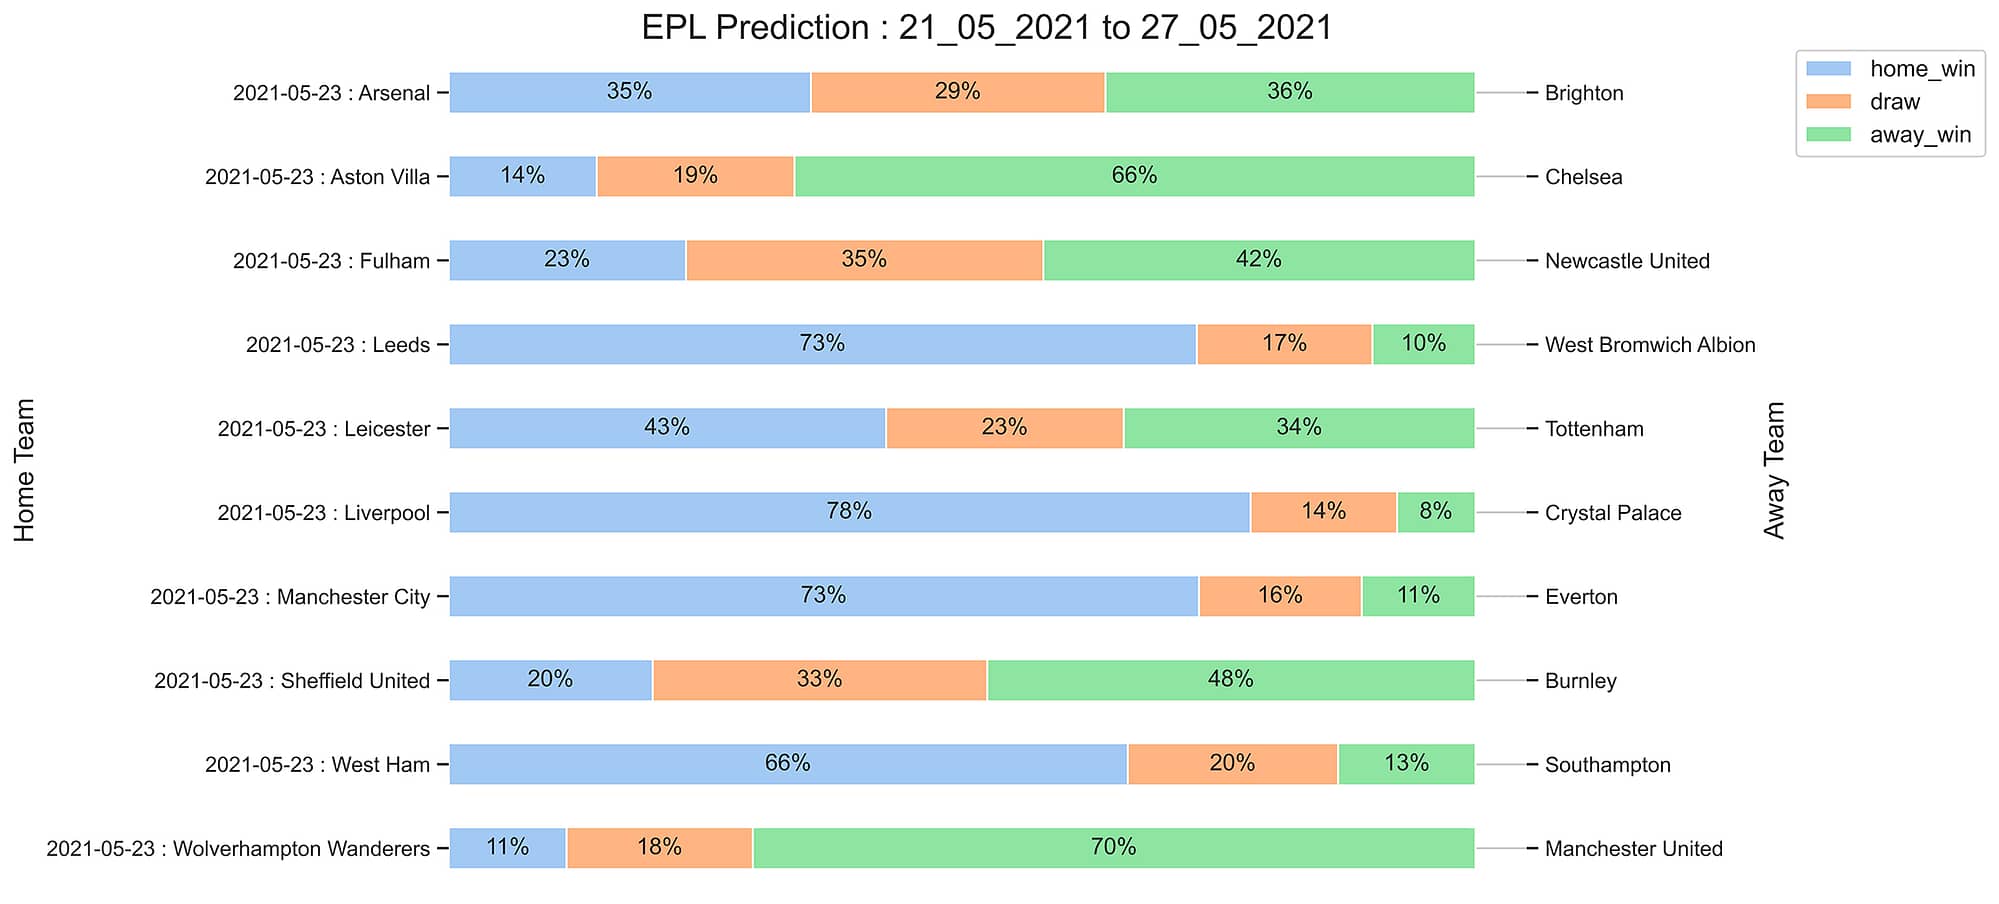 EPL_Prediction 21_05_2021